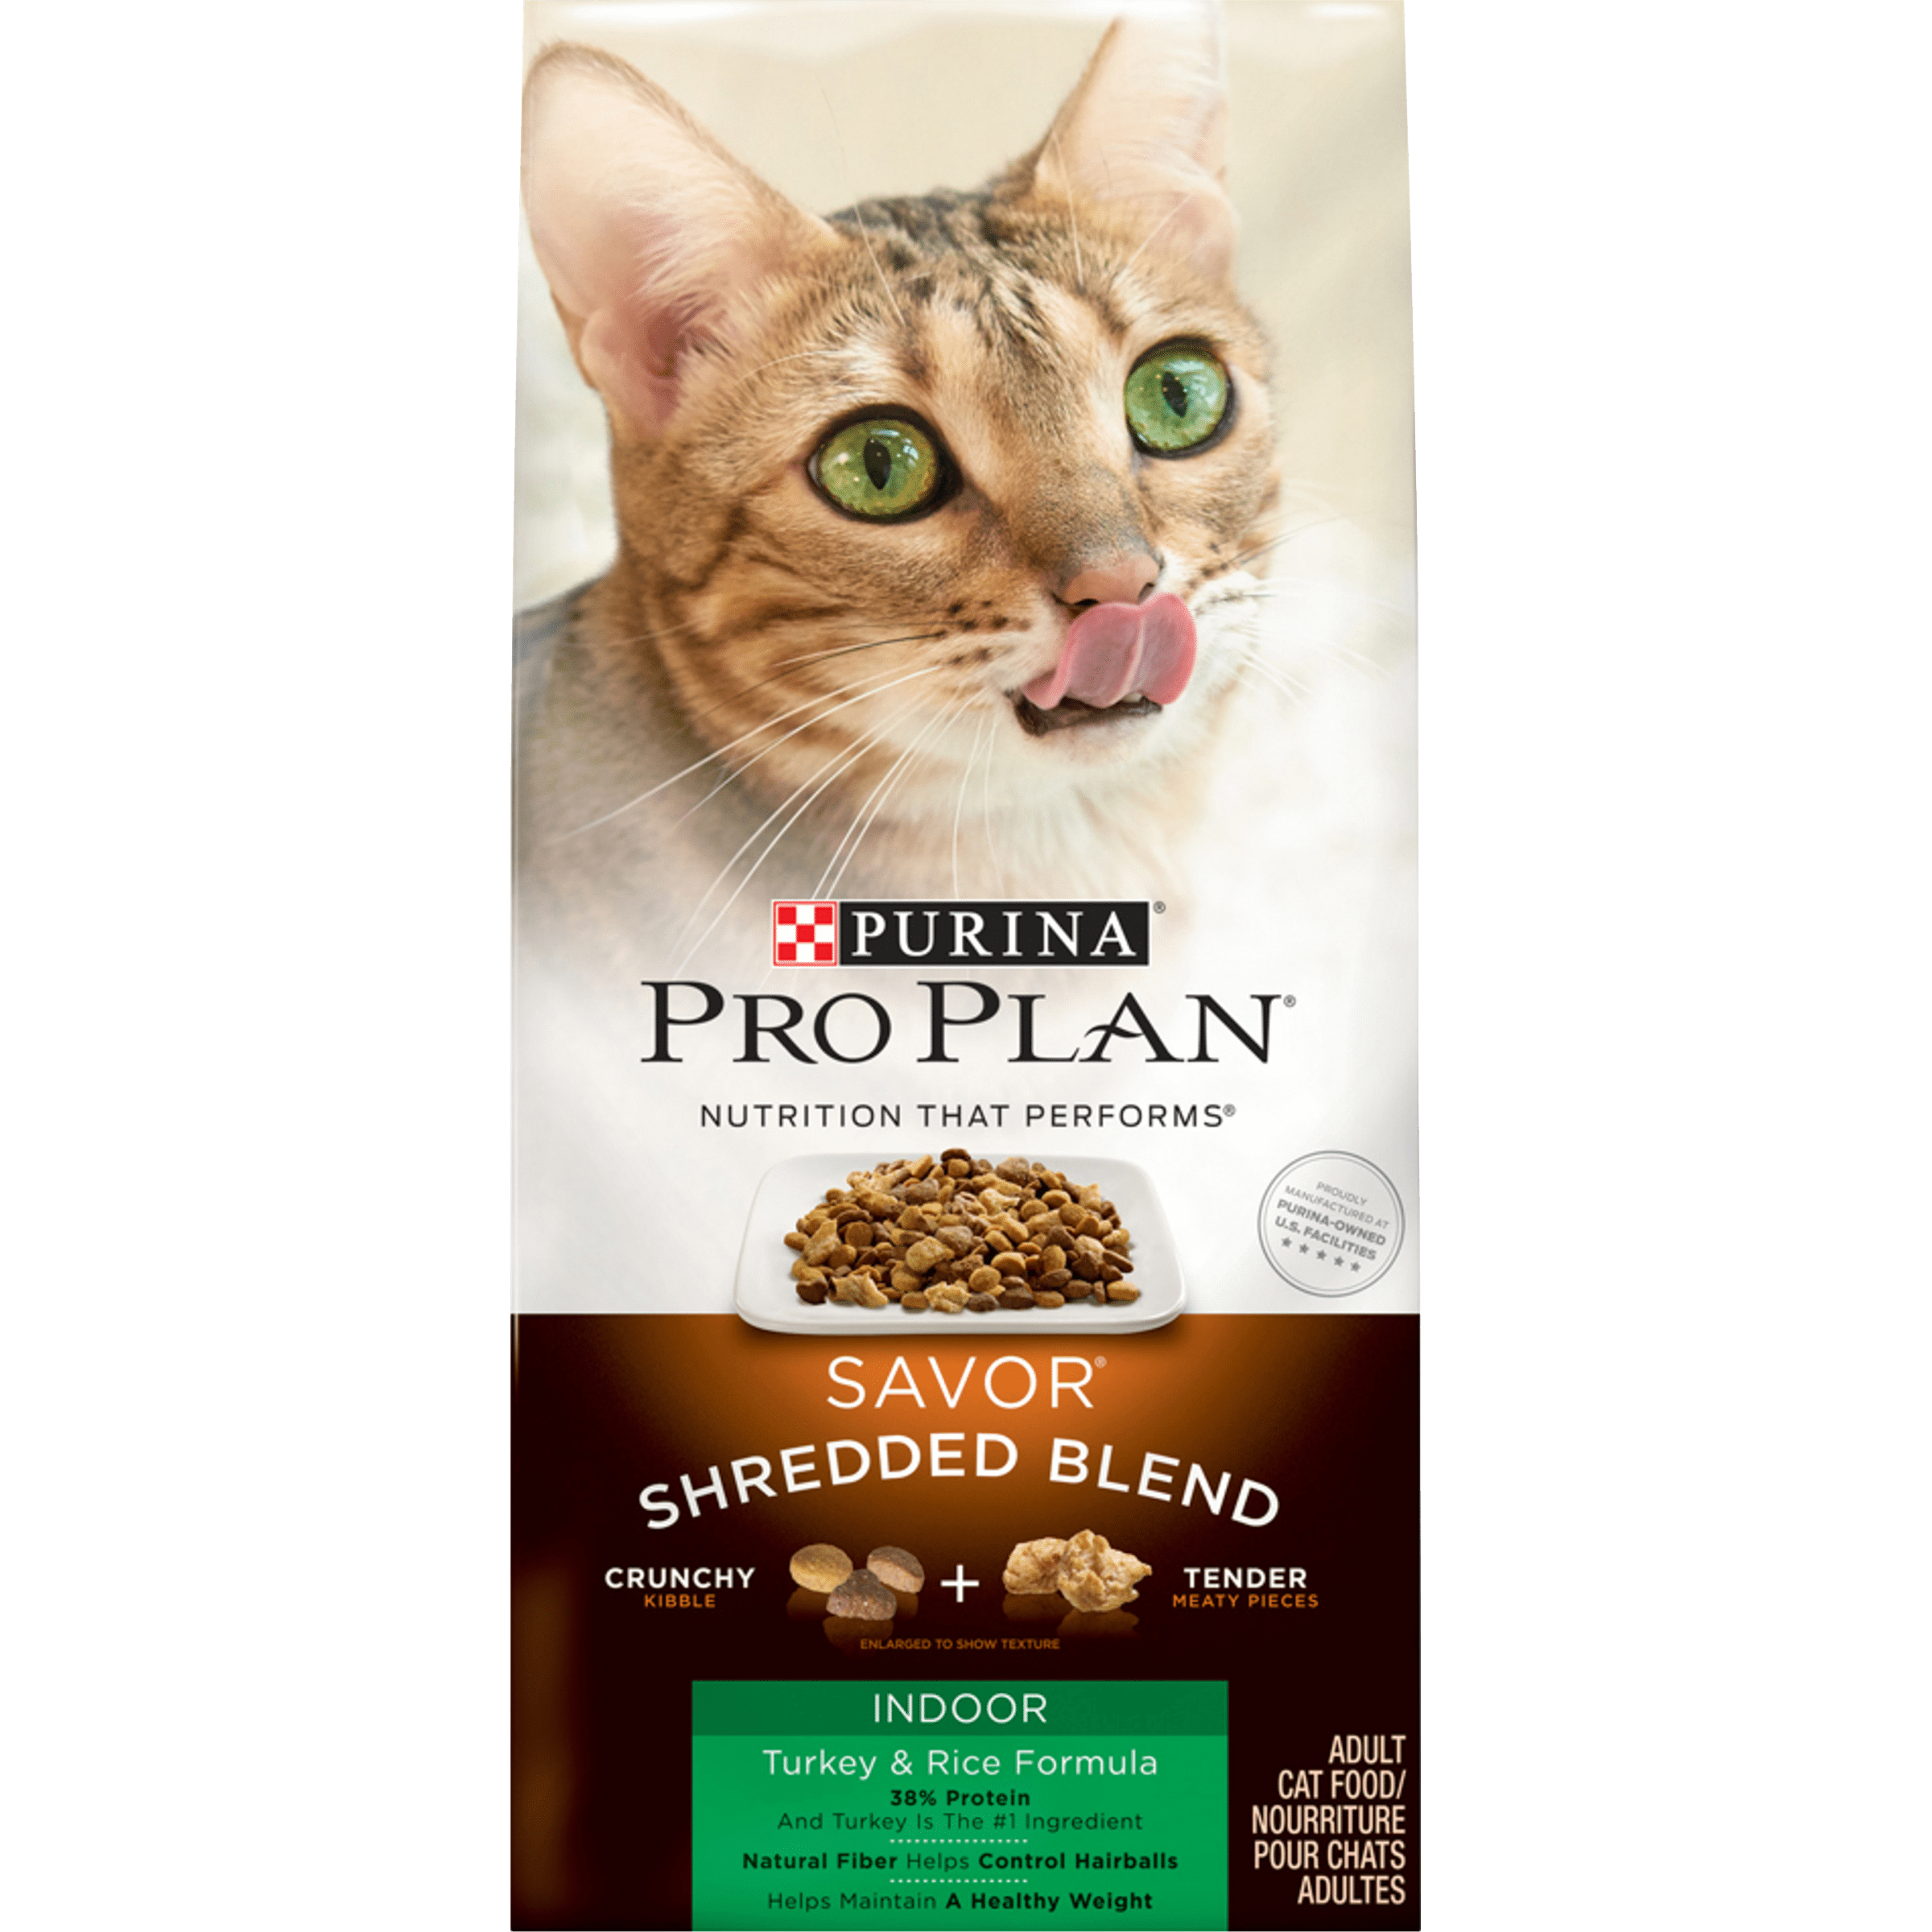 Purina Pro Plan Hairball, Indoor Dry Cat Food, SAVOR Shredded Blend